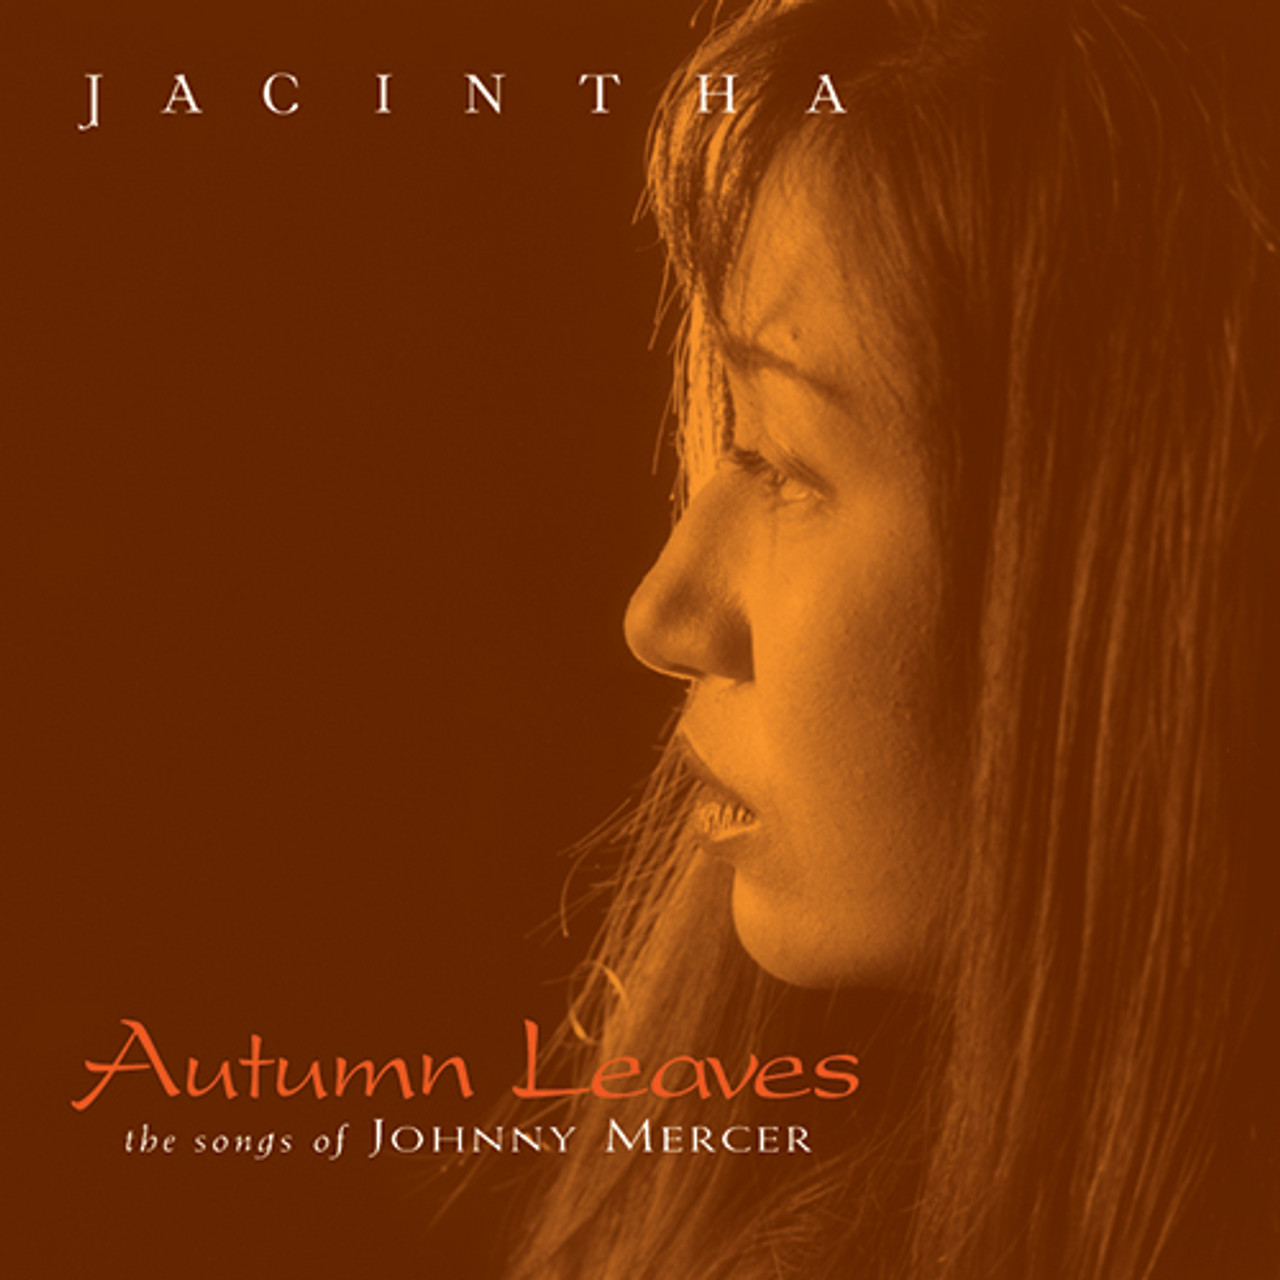 Jacintha Autumn Leaves The Songs Of Johnny Mercer Hybrid Stereo SACD